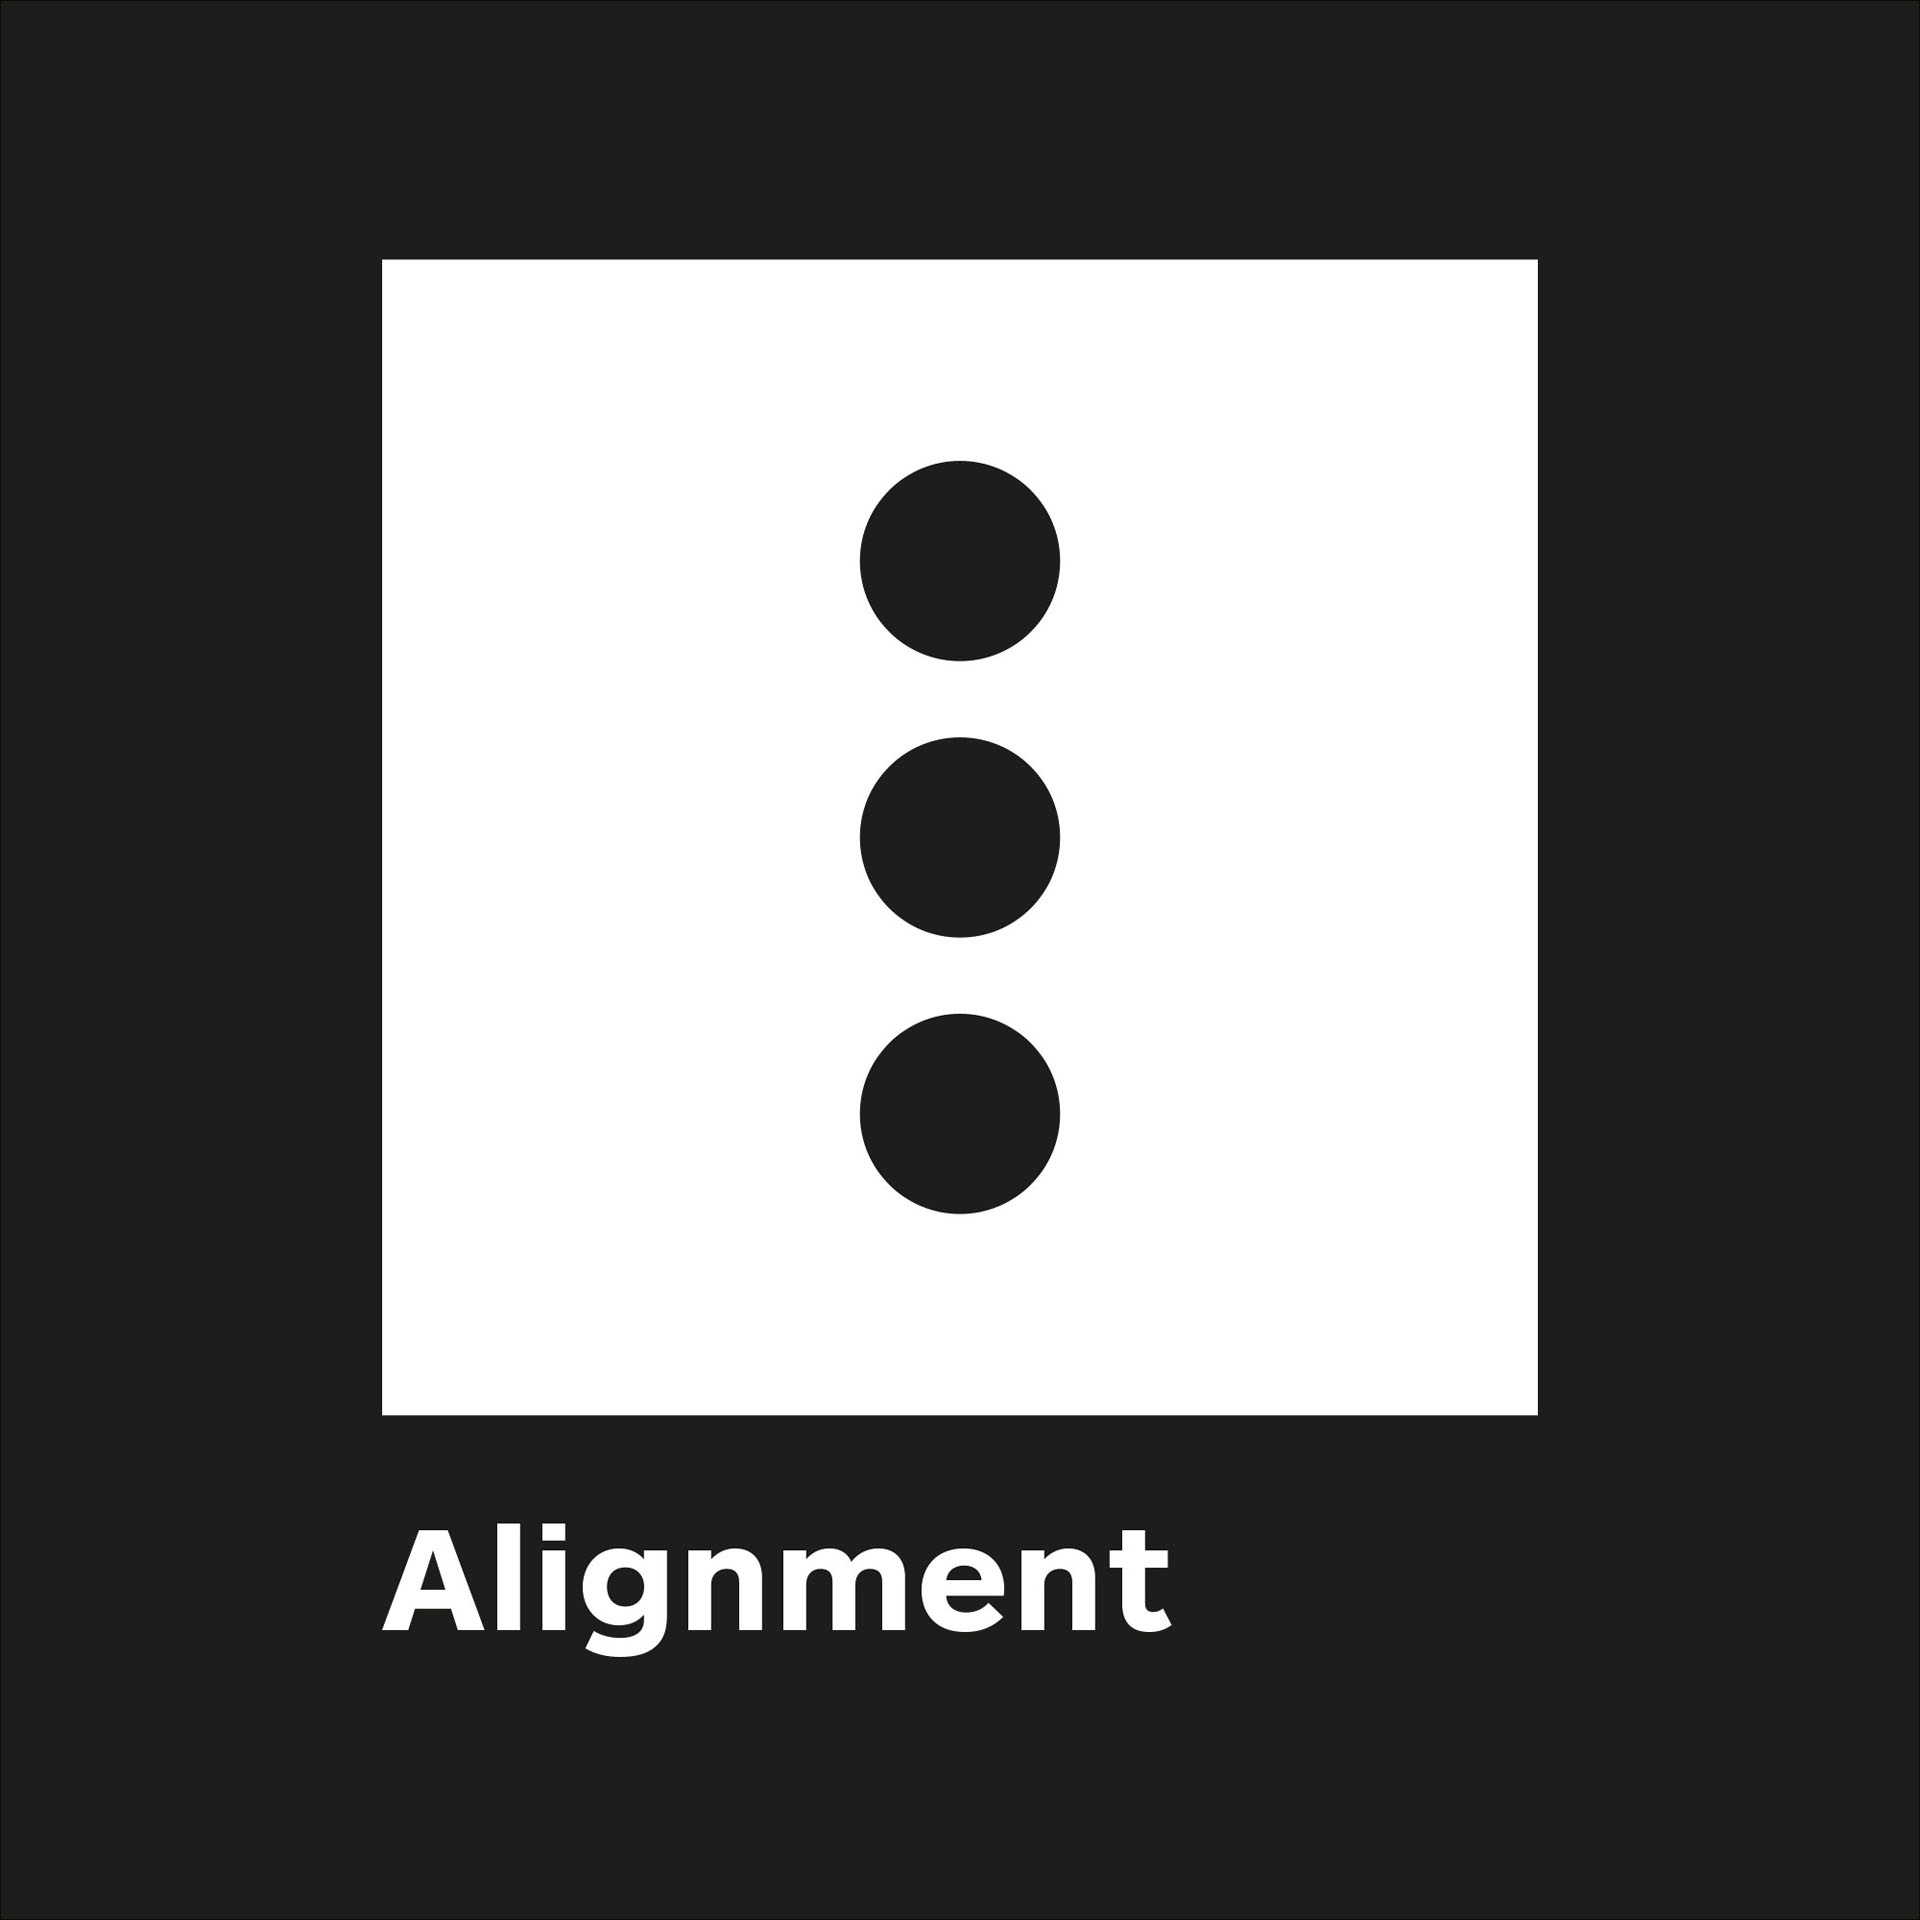 Illustration of the alignment principle in graphic design